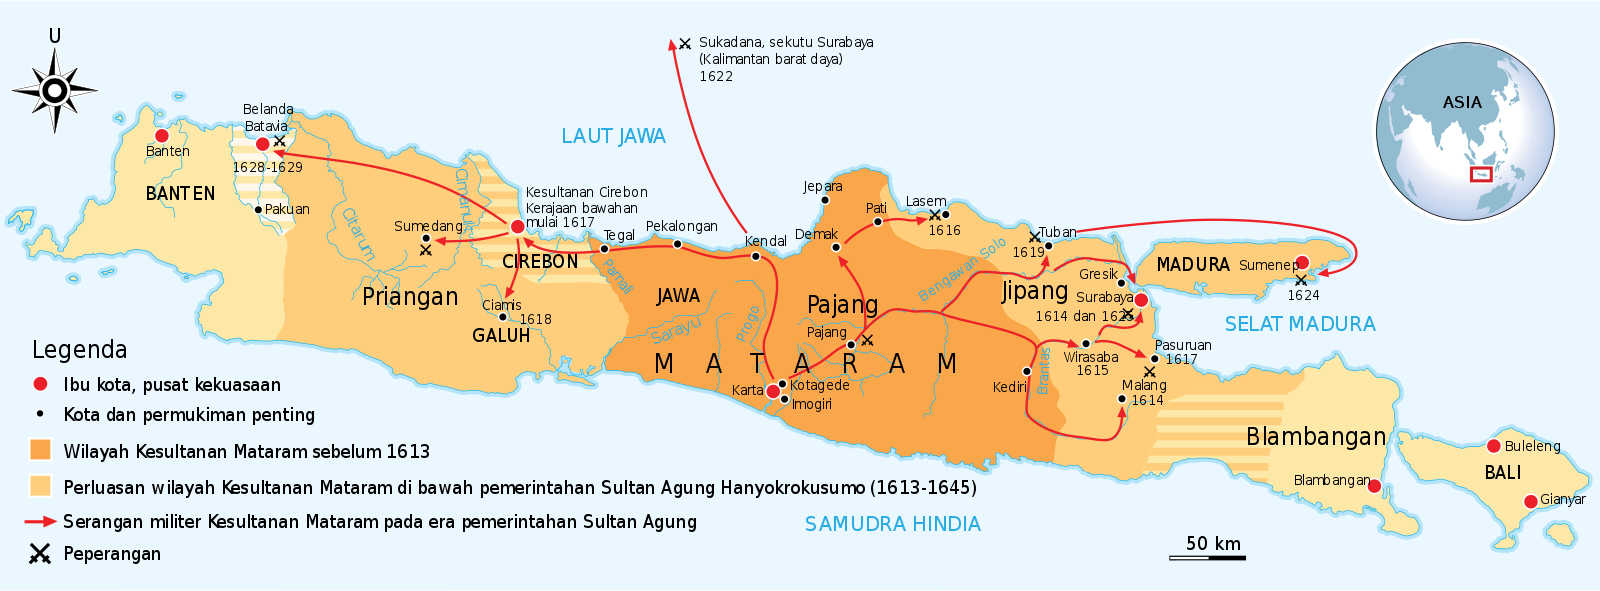 Wilayah Kerajaan Mataram